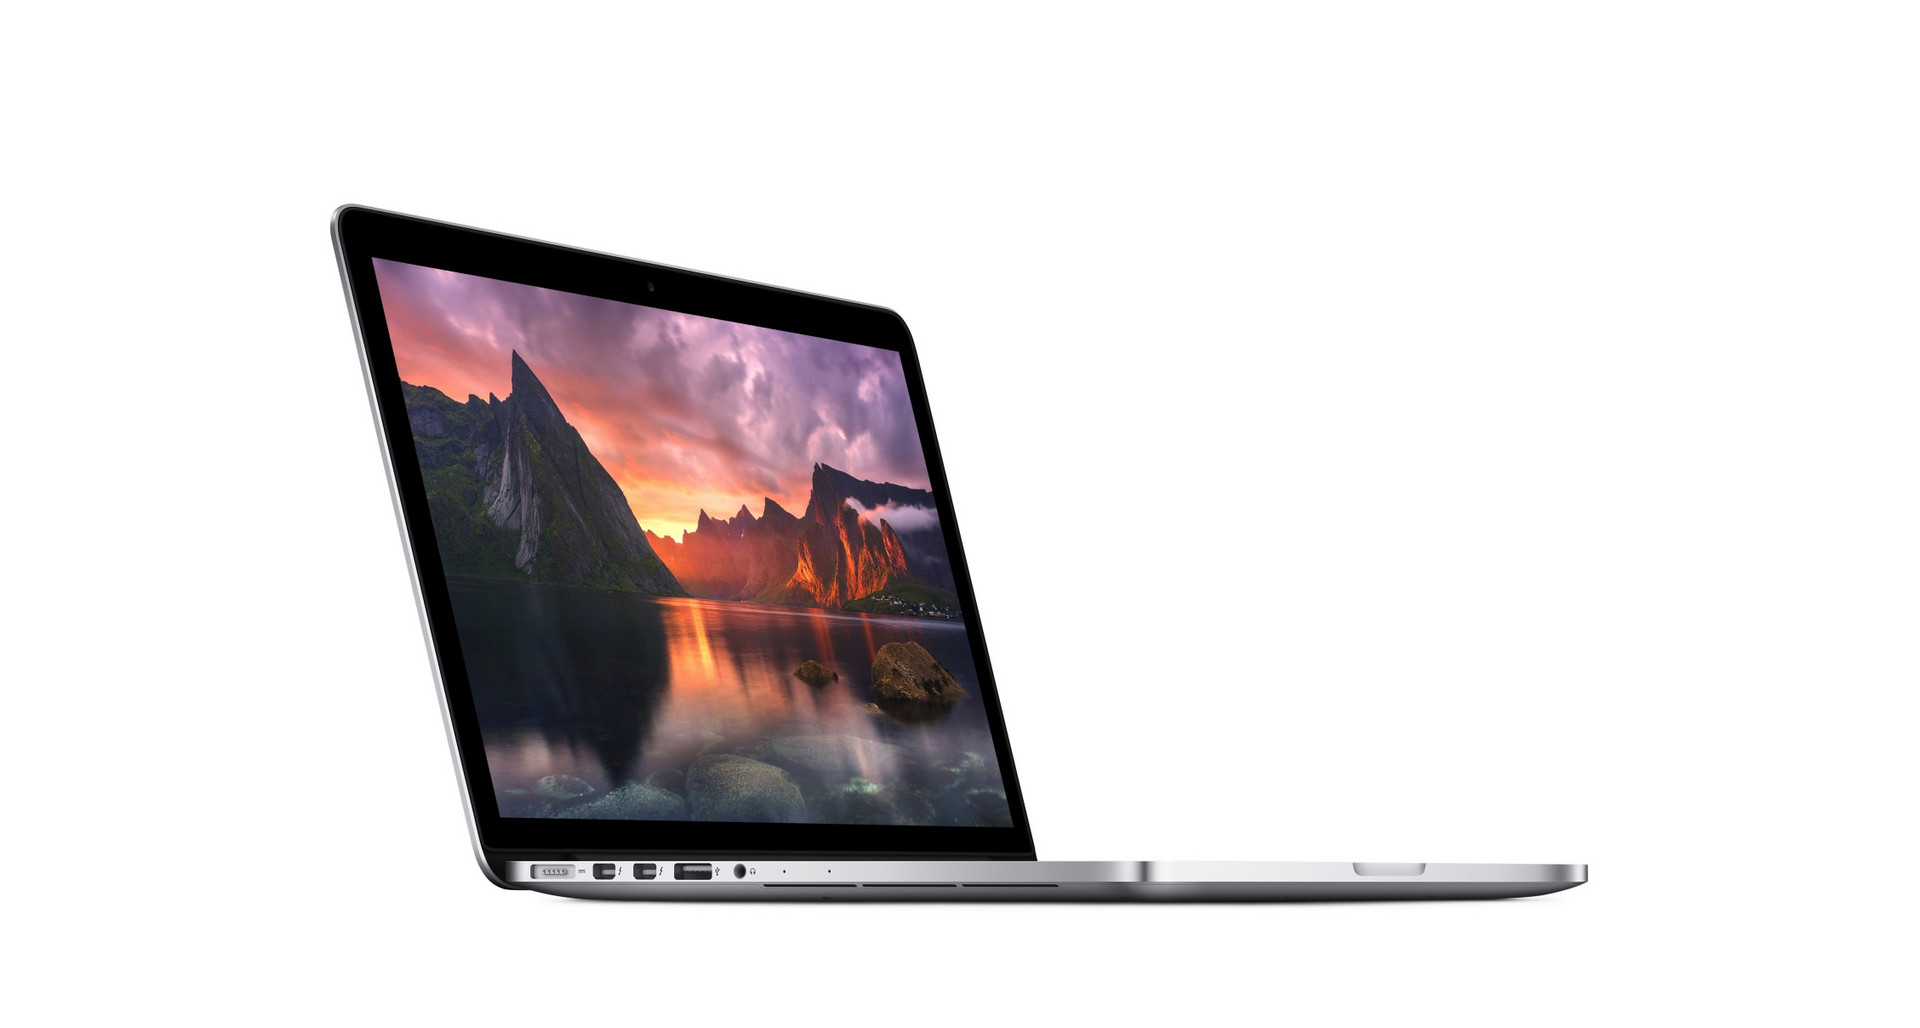 MacBook Pro 15インチ Retina Late 2013